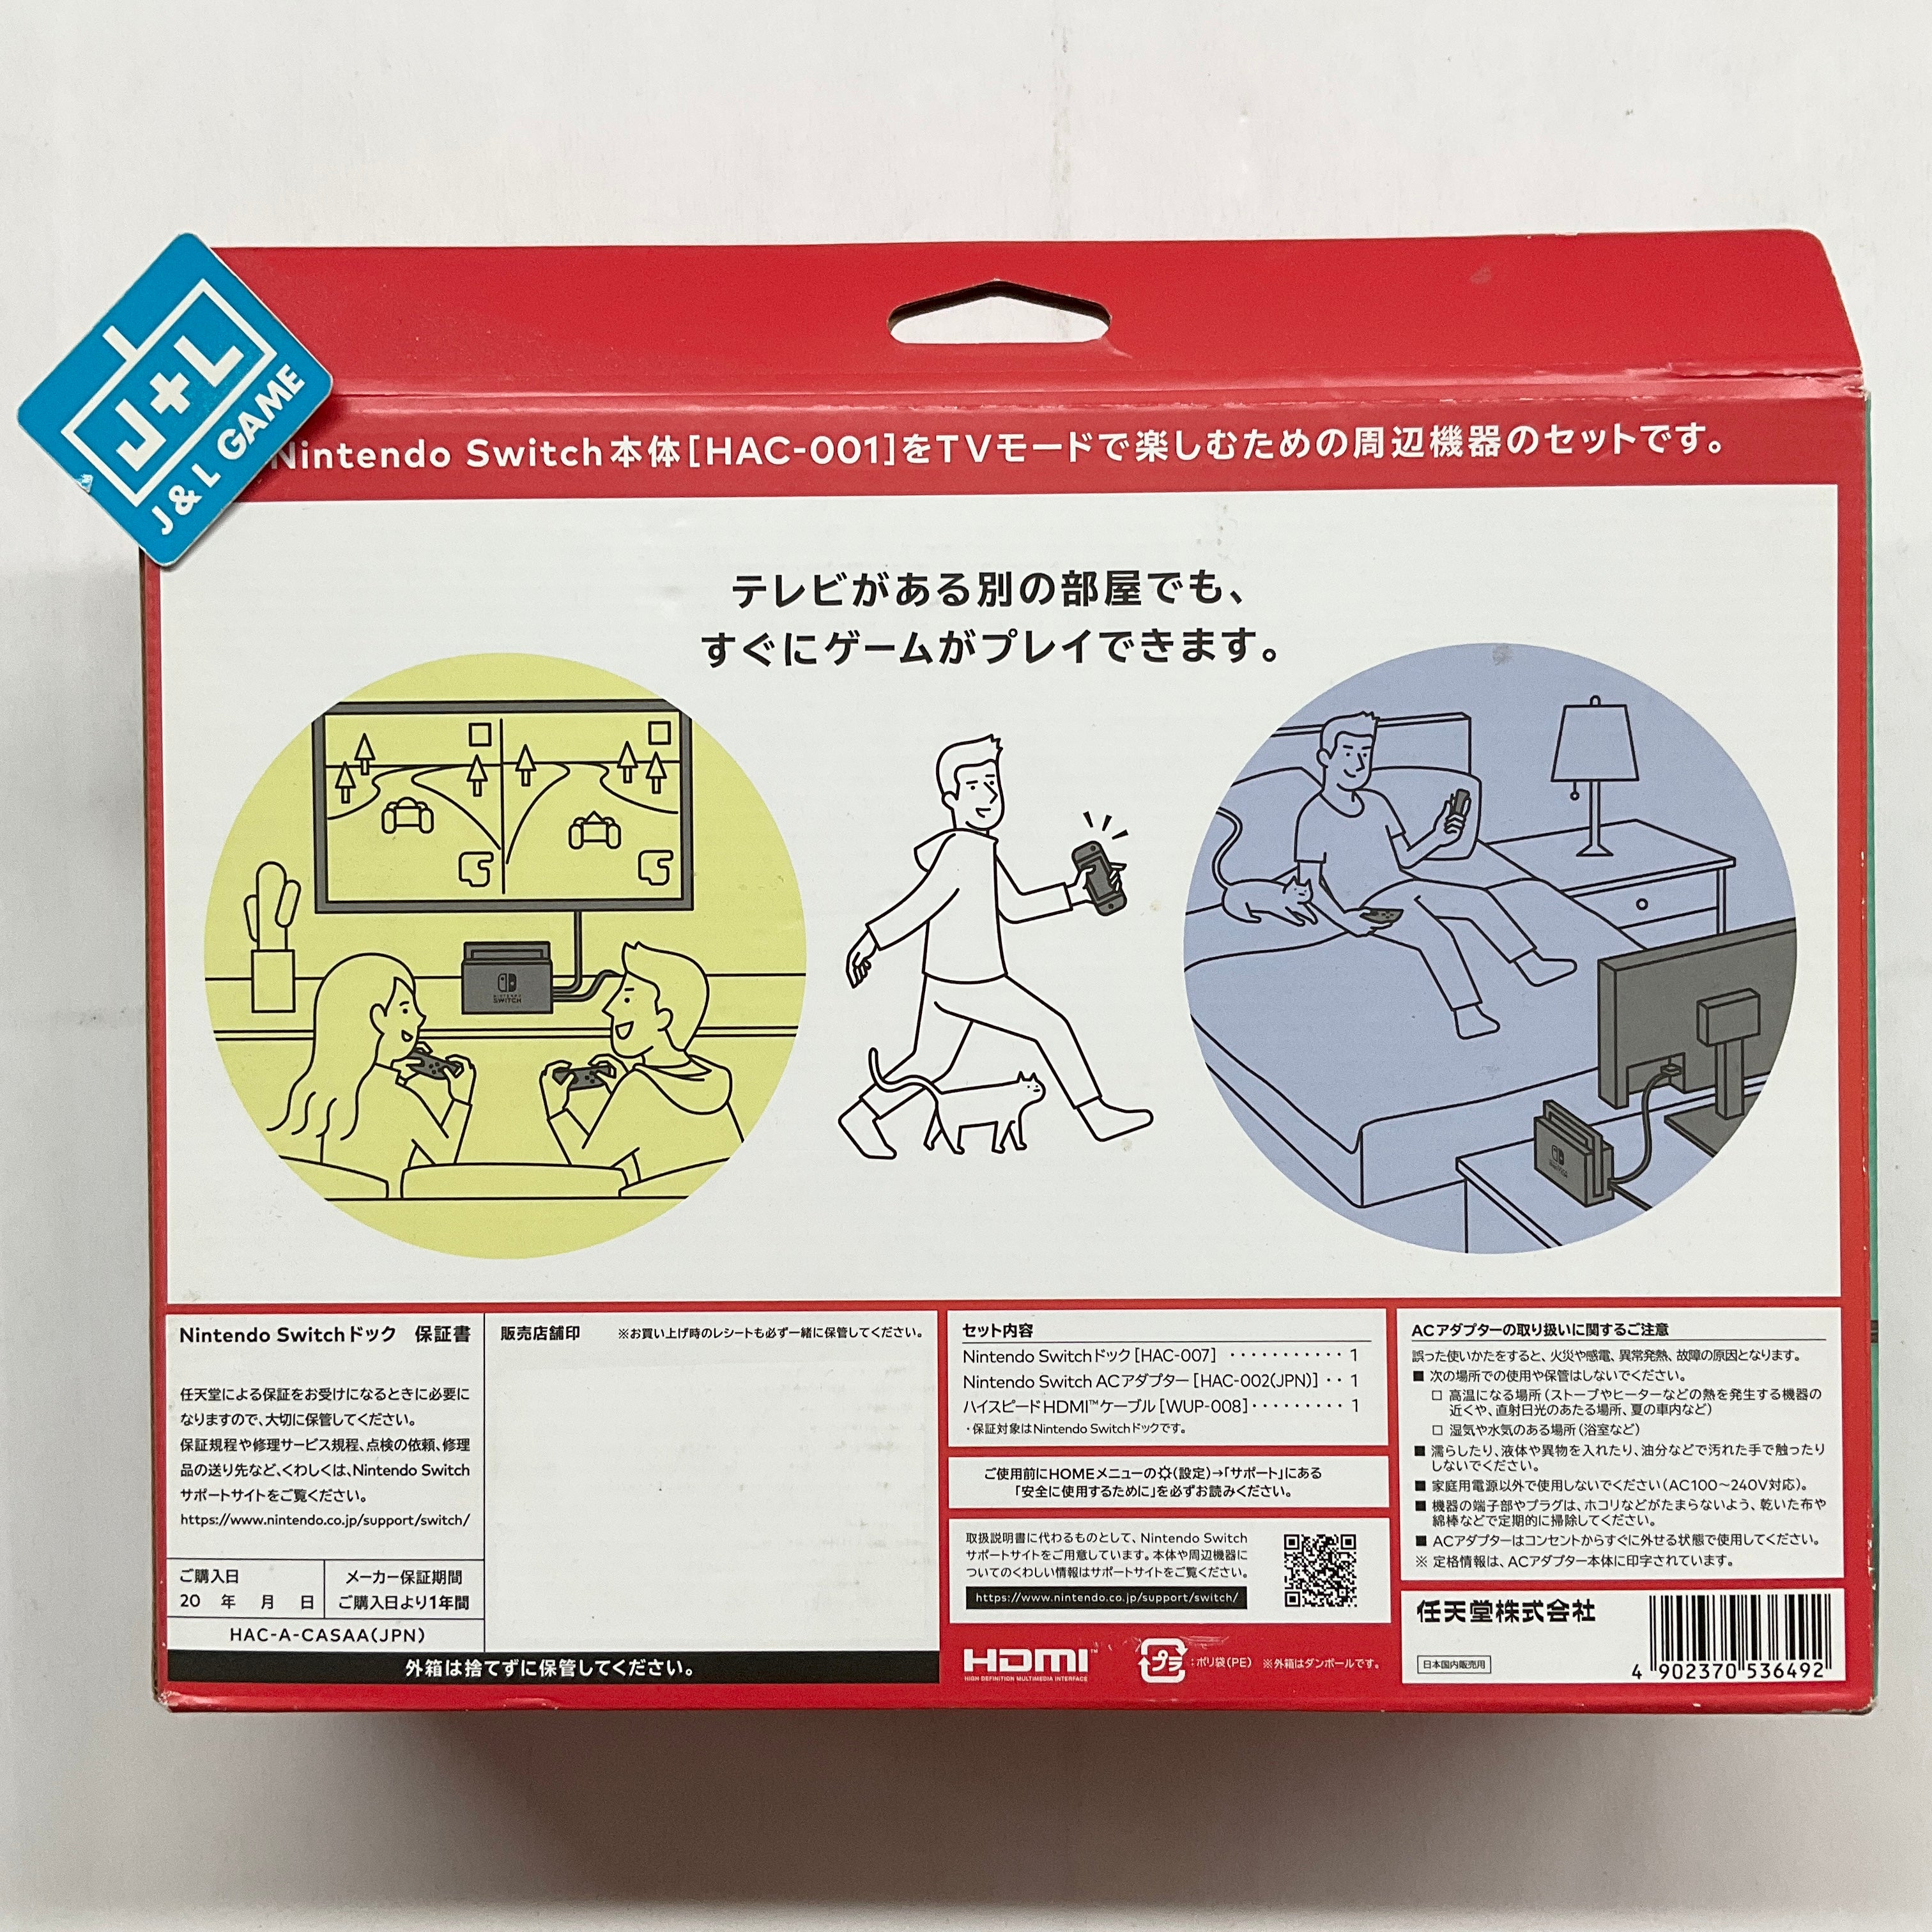 Nintendo Switch Dock Set - (NSW) Nintendo Switch (Japanese Import) [Open Box] Accessories Nintendo   